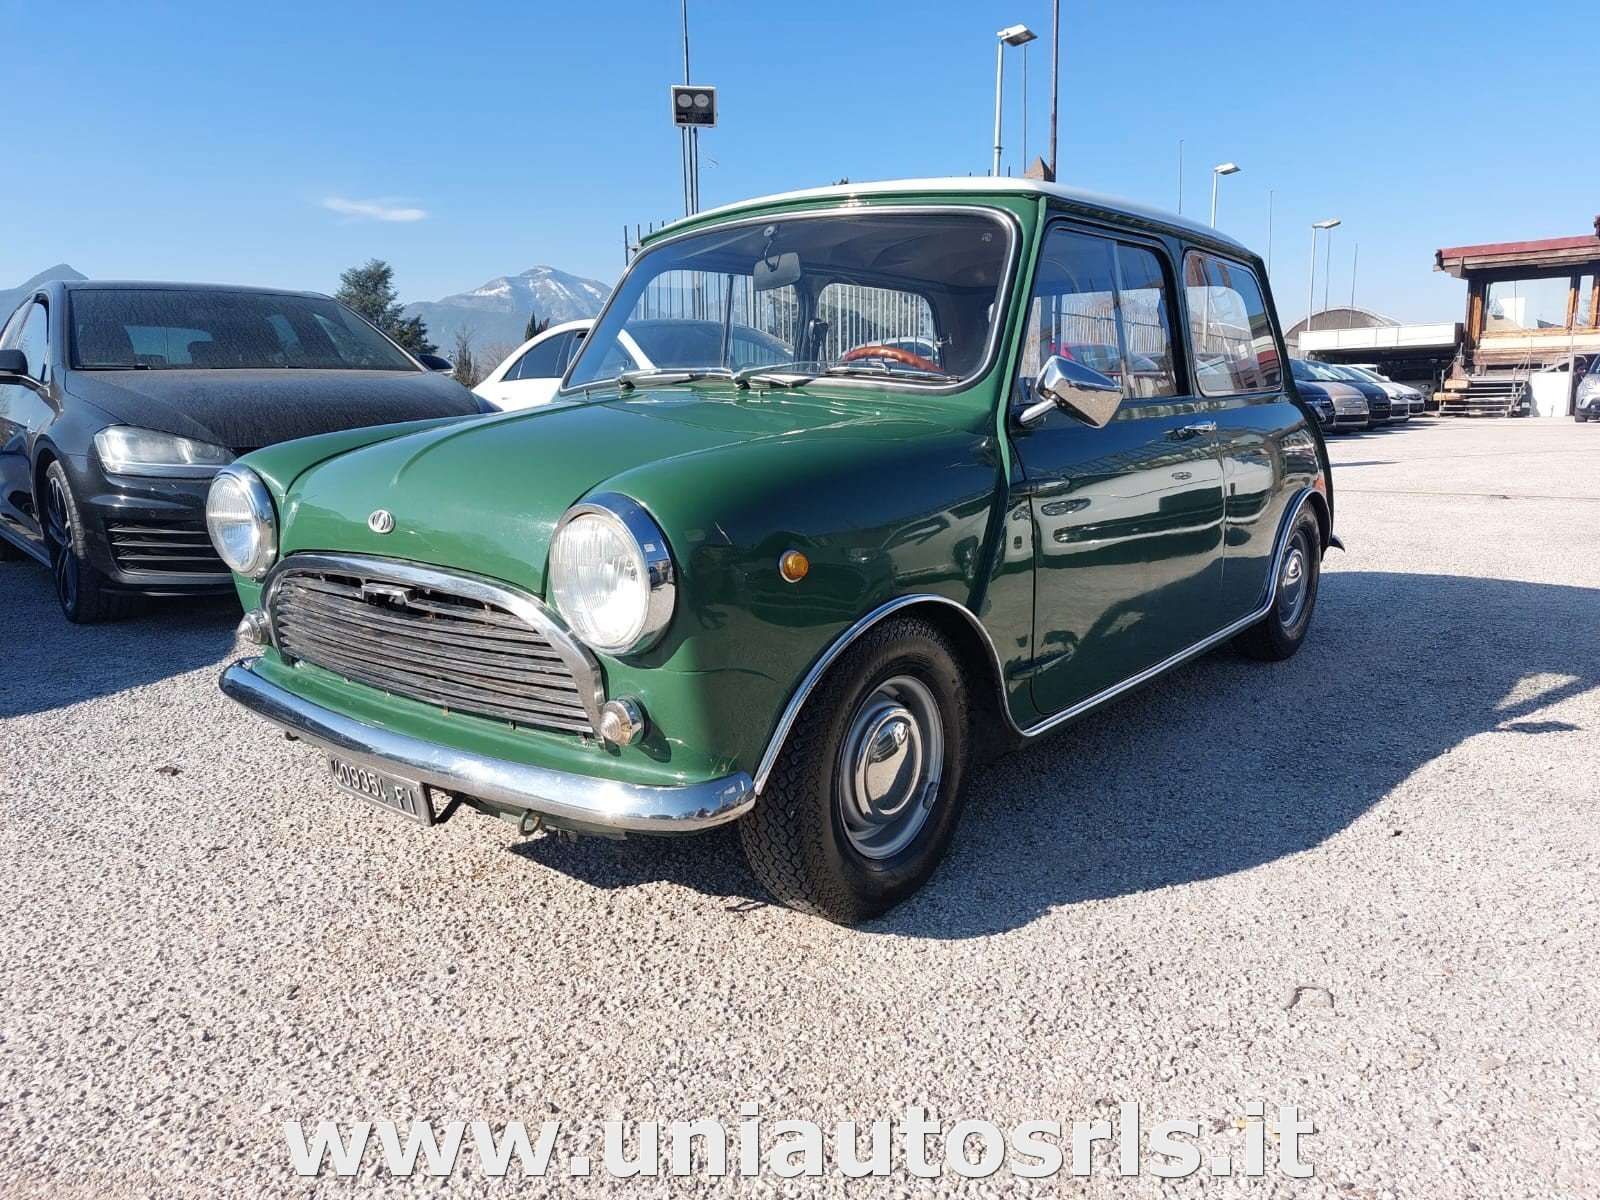 Innocenti Mini Other in Green used in Frosinone for € 6,000.-